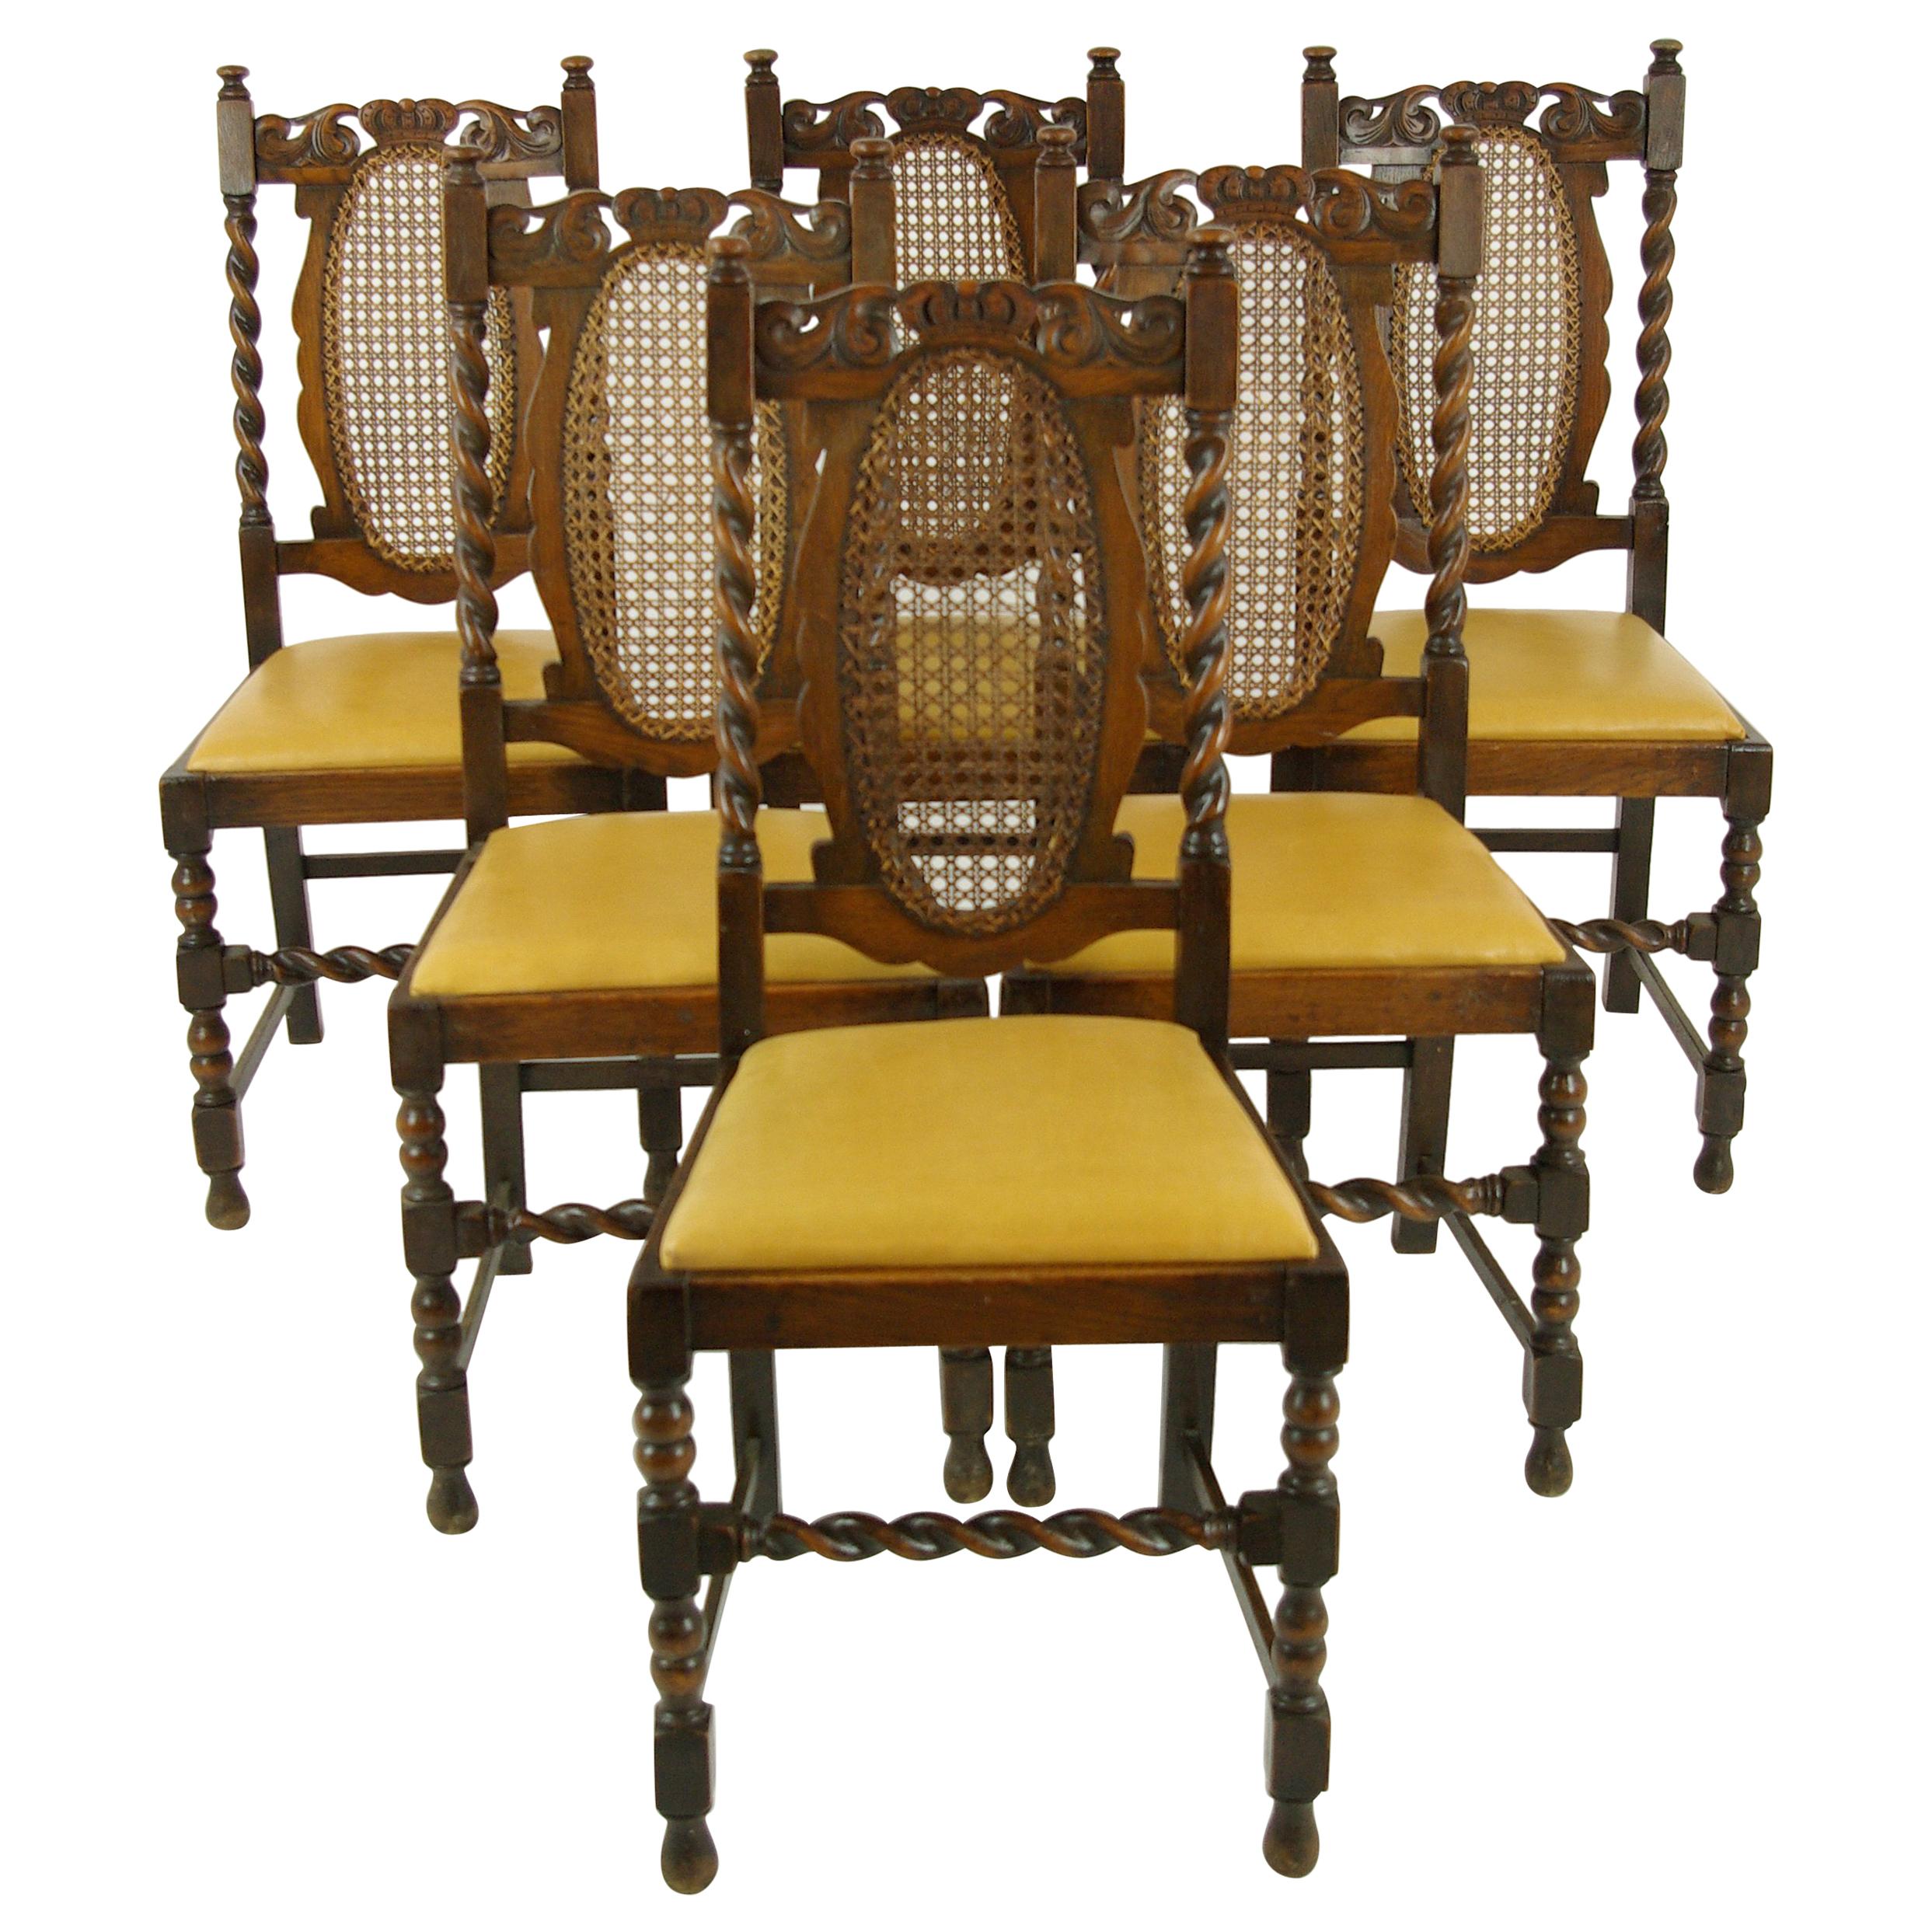 6 Oak Dining Chairs, Barley Twist Chairs, Scotland 1920, Antique Furniture B1375